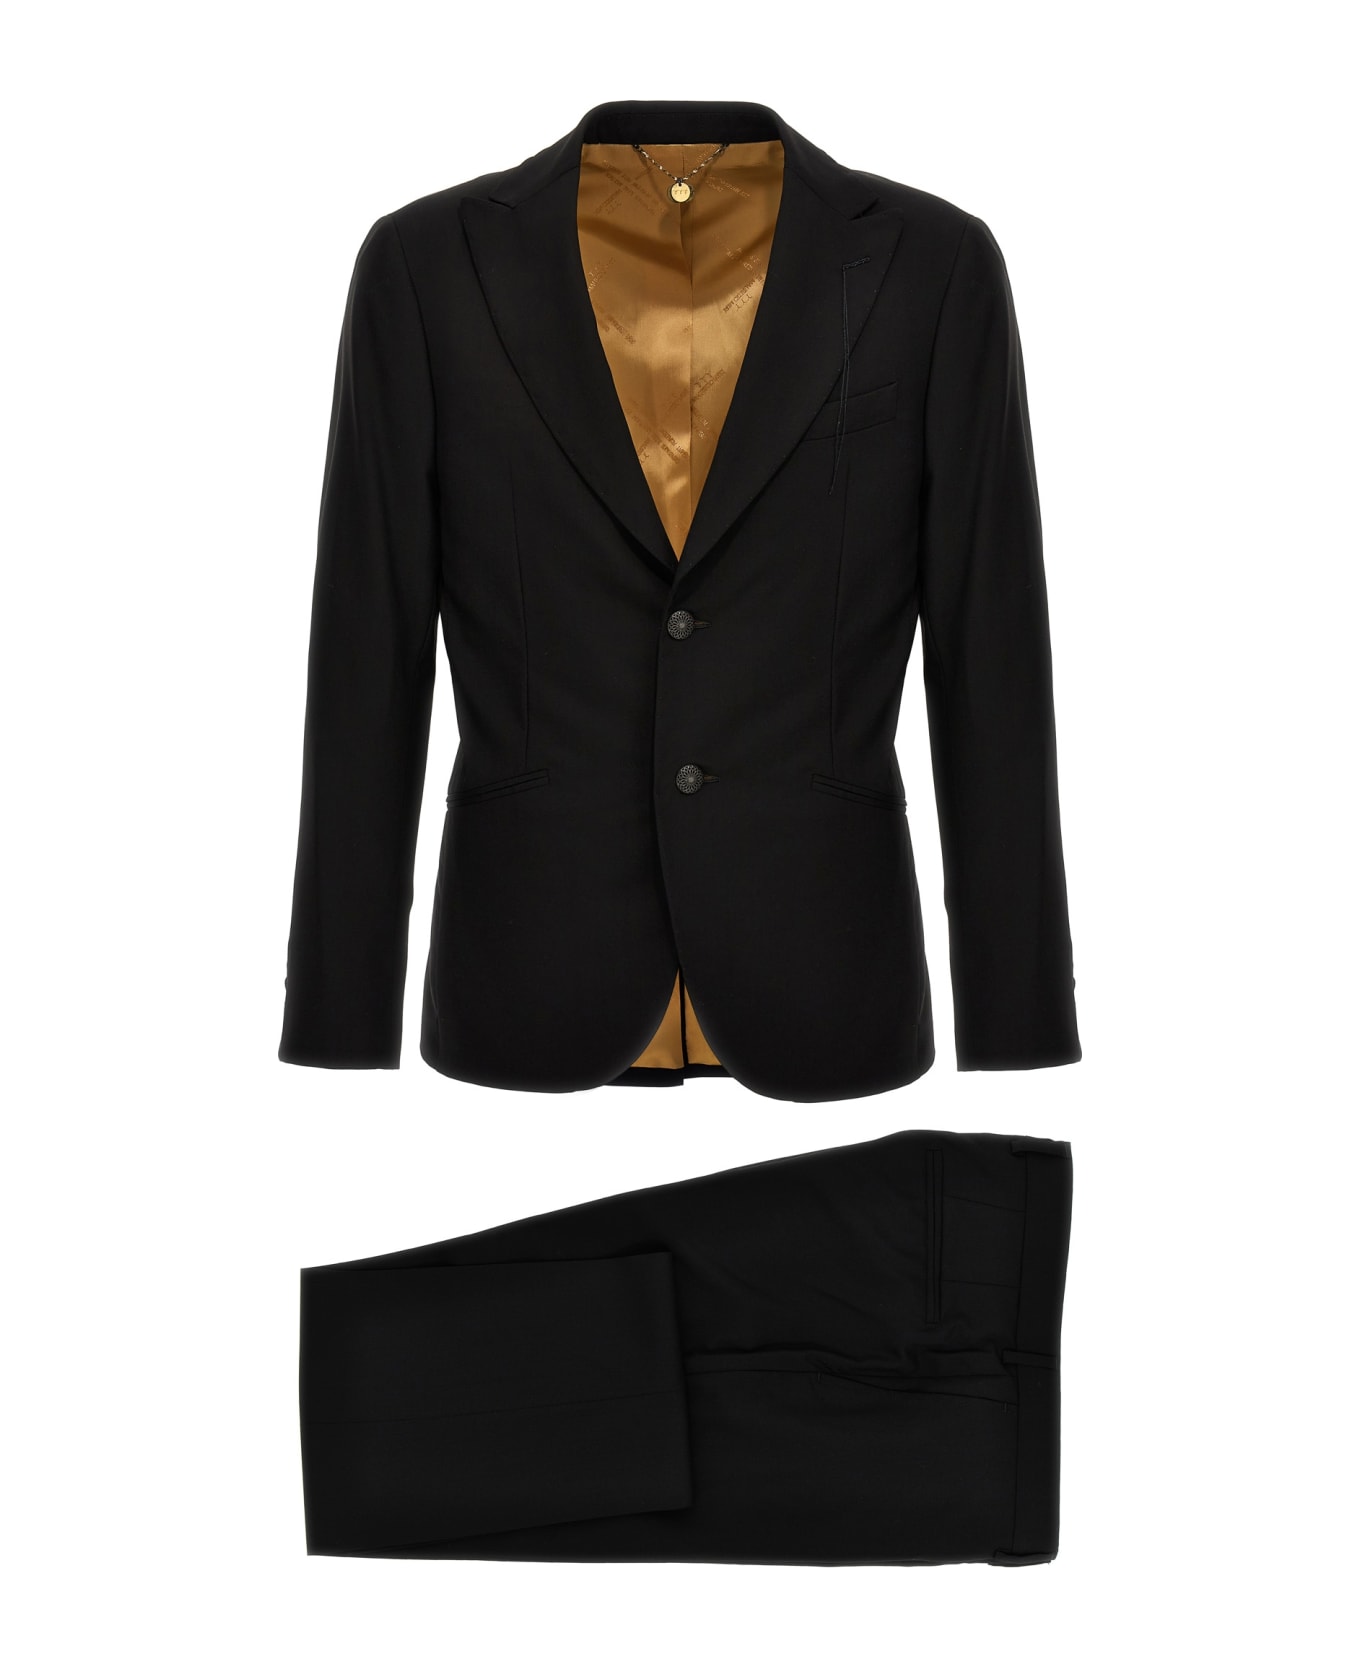 Maurizio Miri 'kery Arold' Suit - Black   スーツ